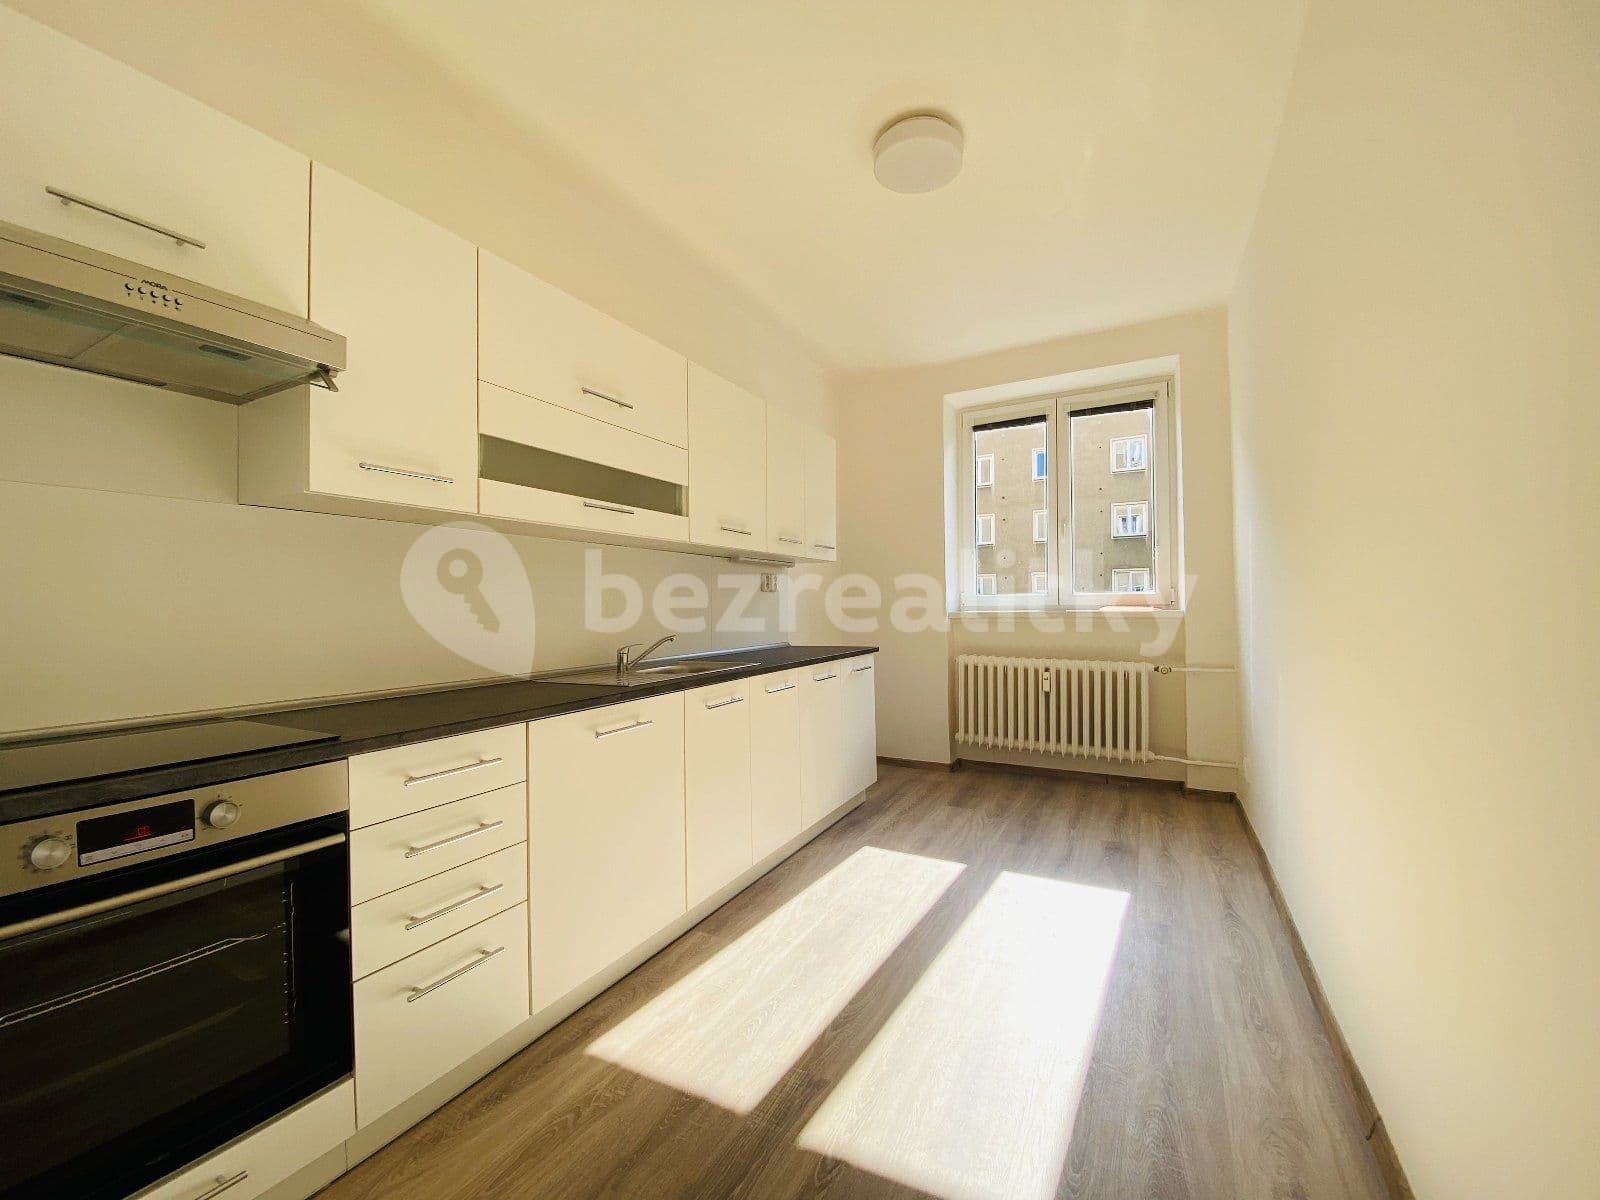 2 bedroom flat to rent, 56 m², Opletalova, Ostrava, Moravskoslezský Region